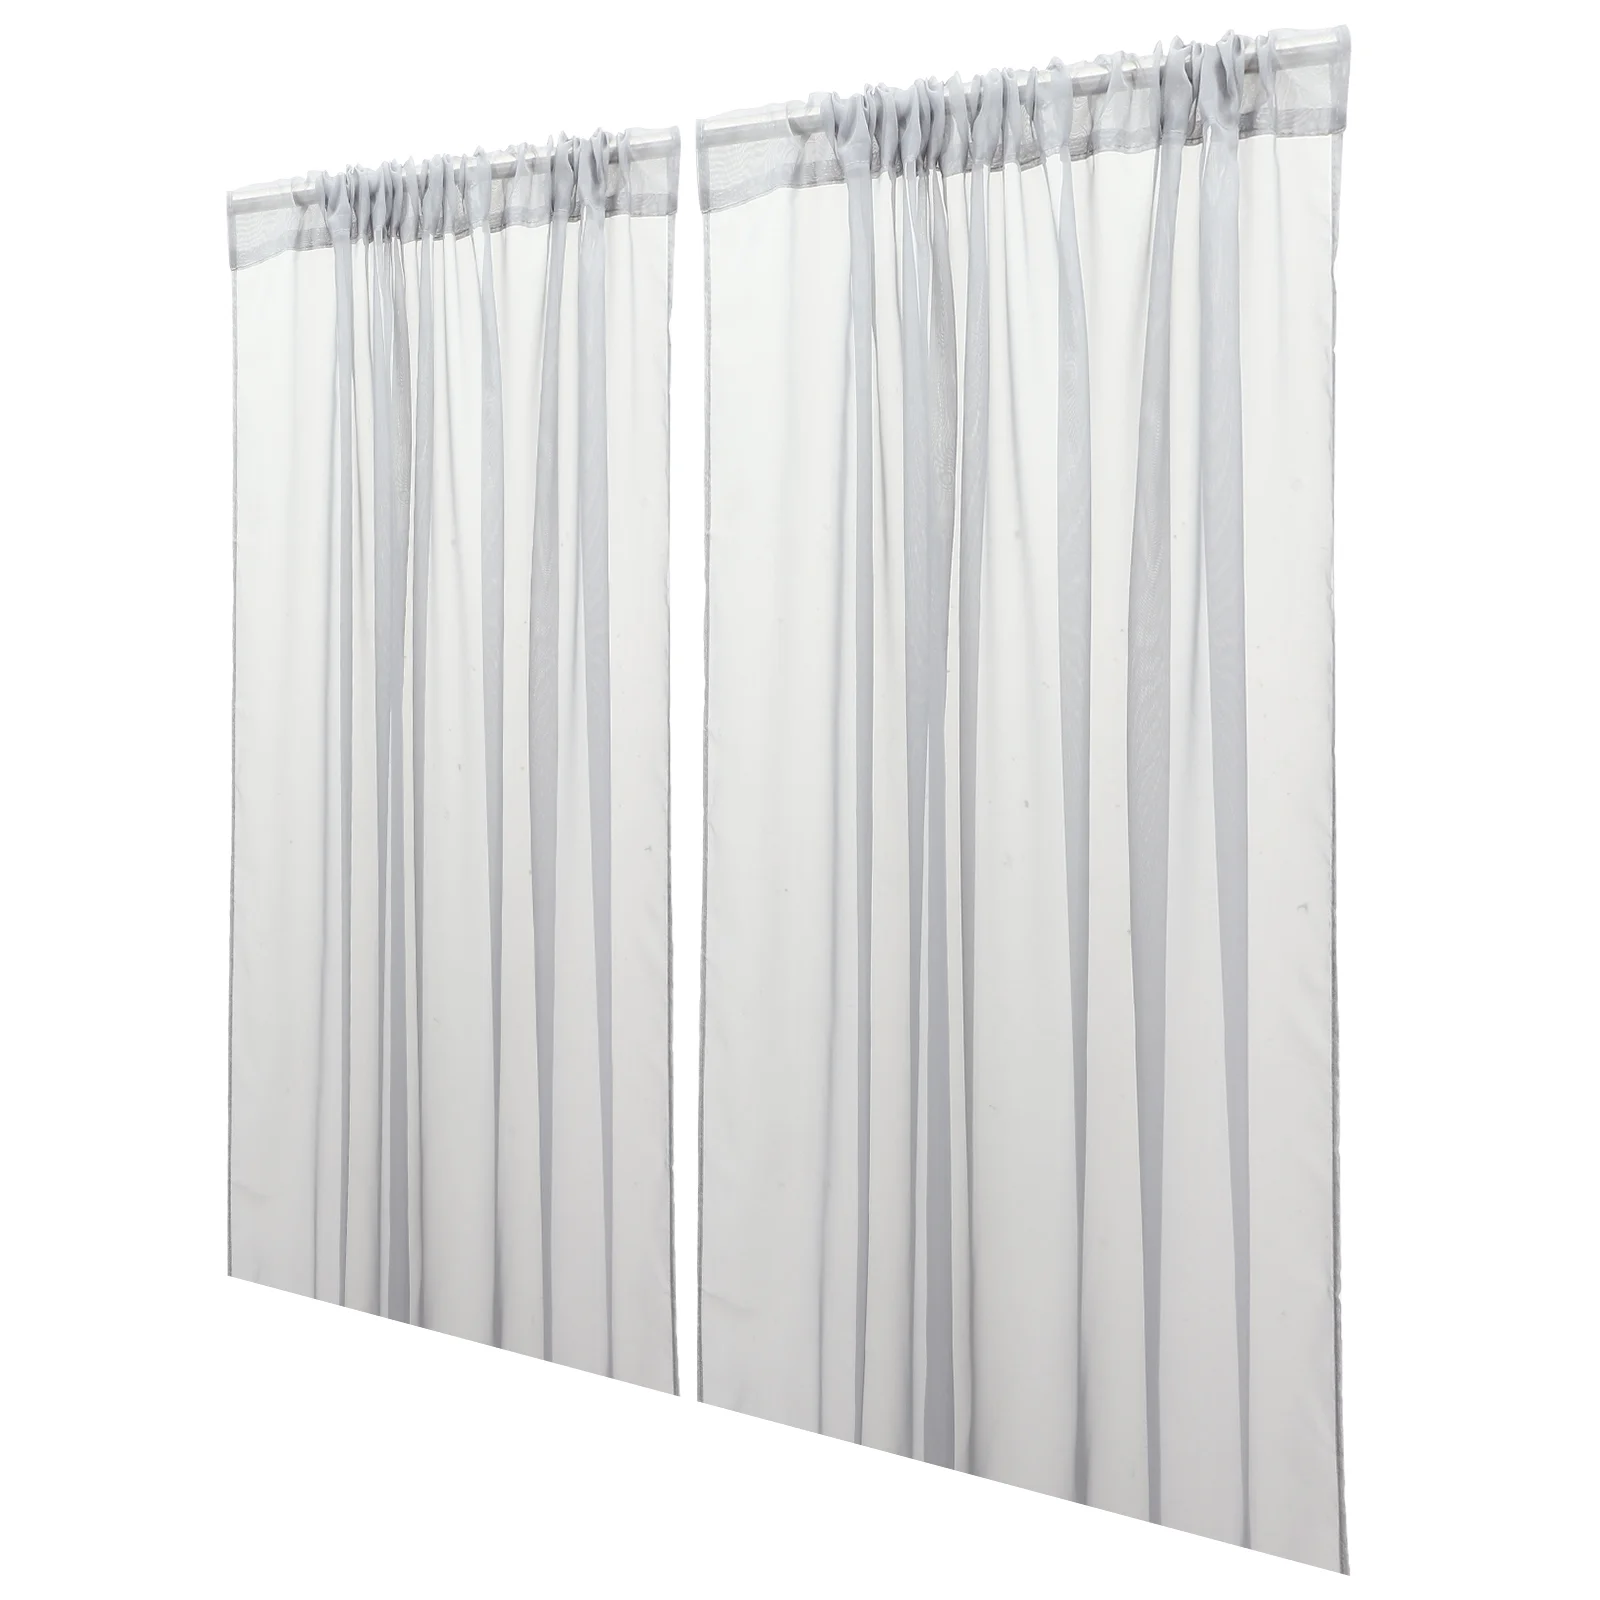 

Window Curtain Curtains Drapes Panels Sheer Windows Voile Drapery Shade Valance Bedroom Balcony Home Covers Drape Living Room